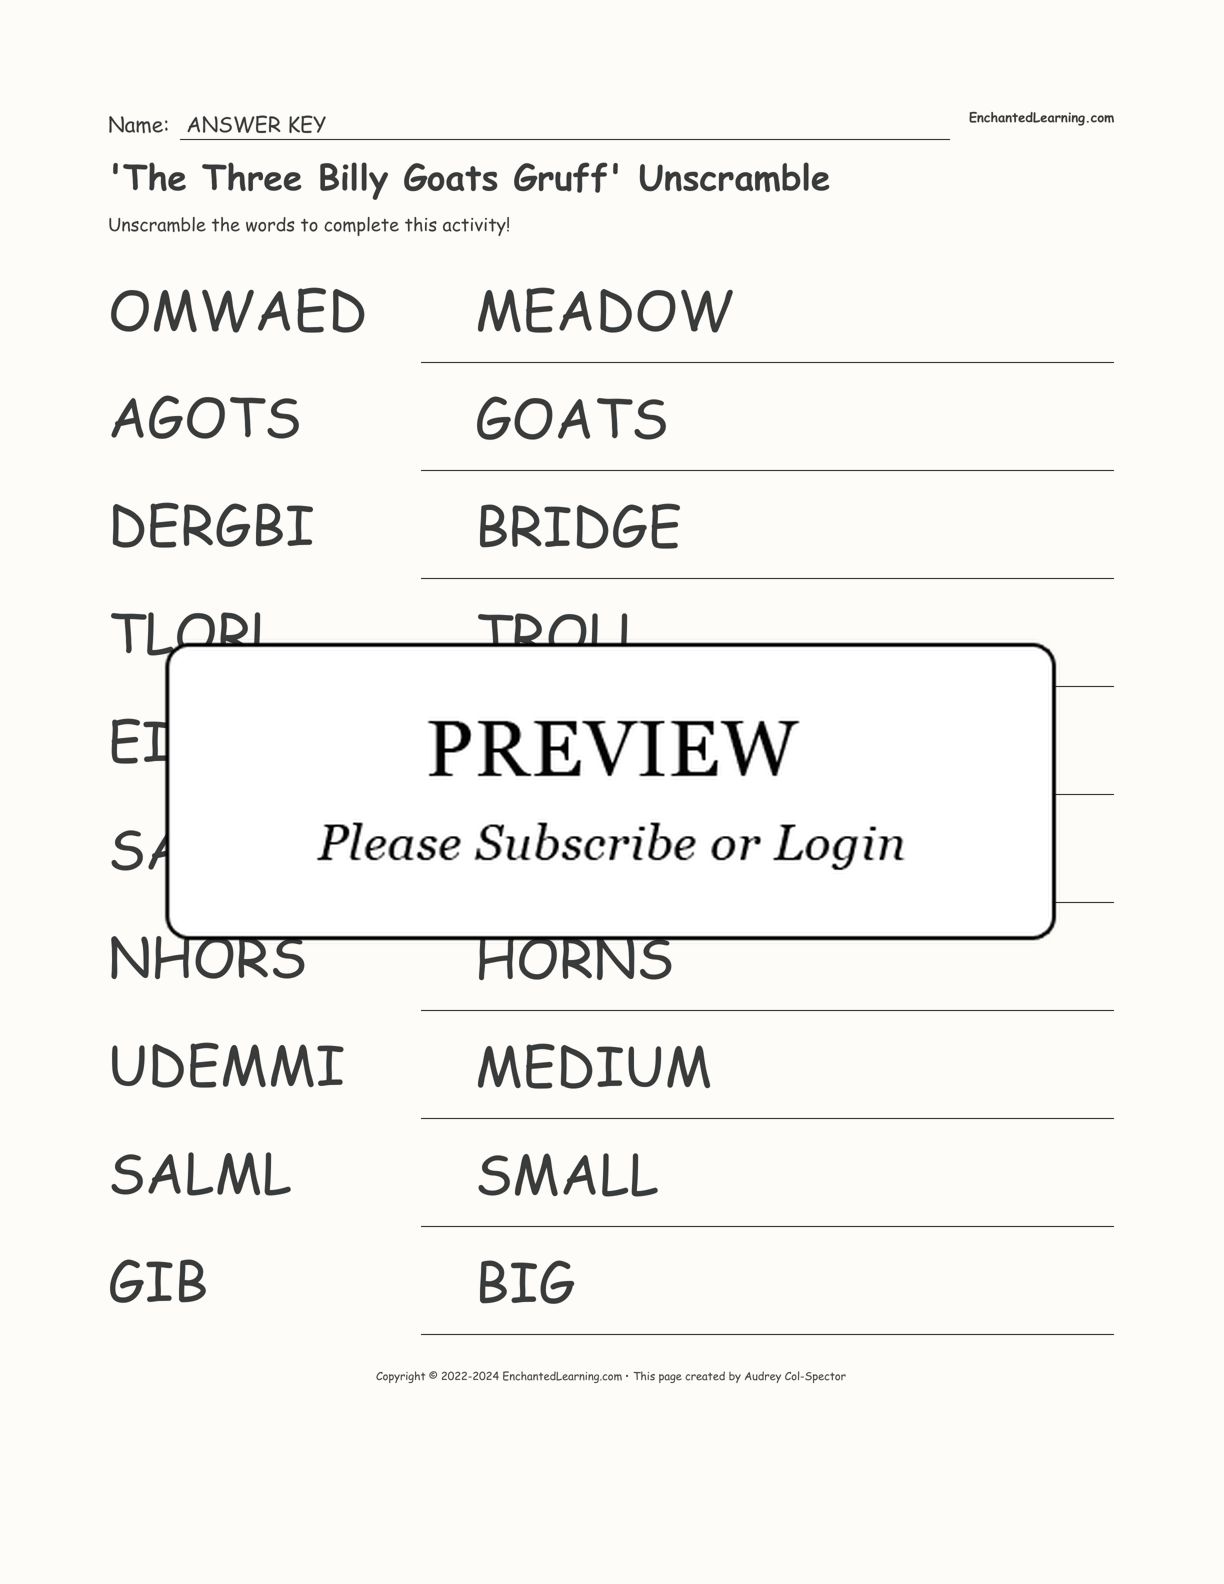 'The Three Billy Goats Gruff' Unscramble interactive worksheet page 2